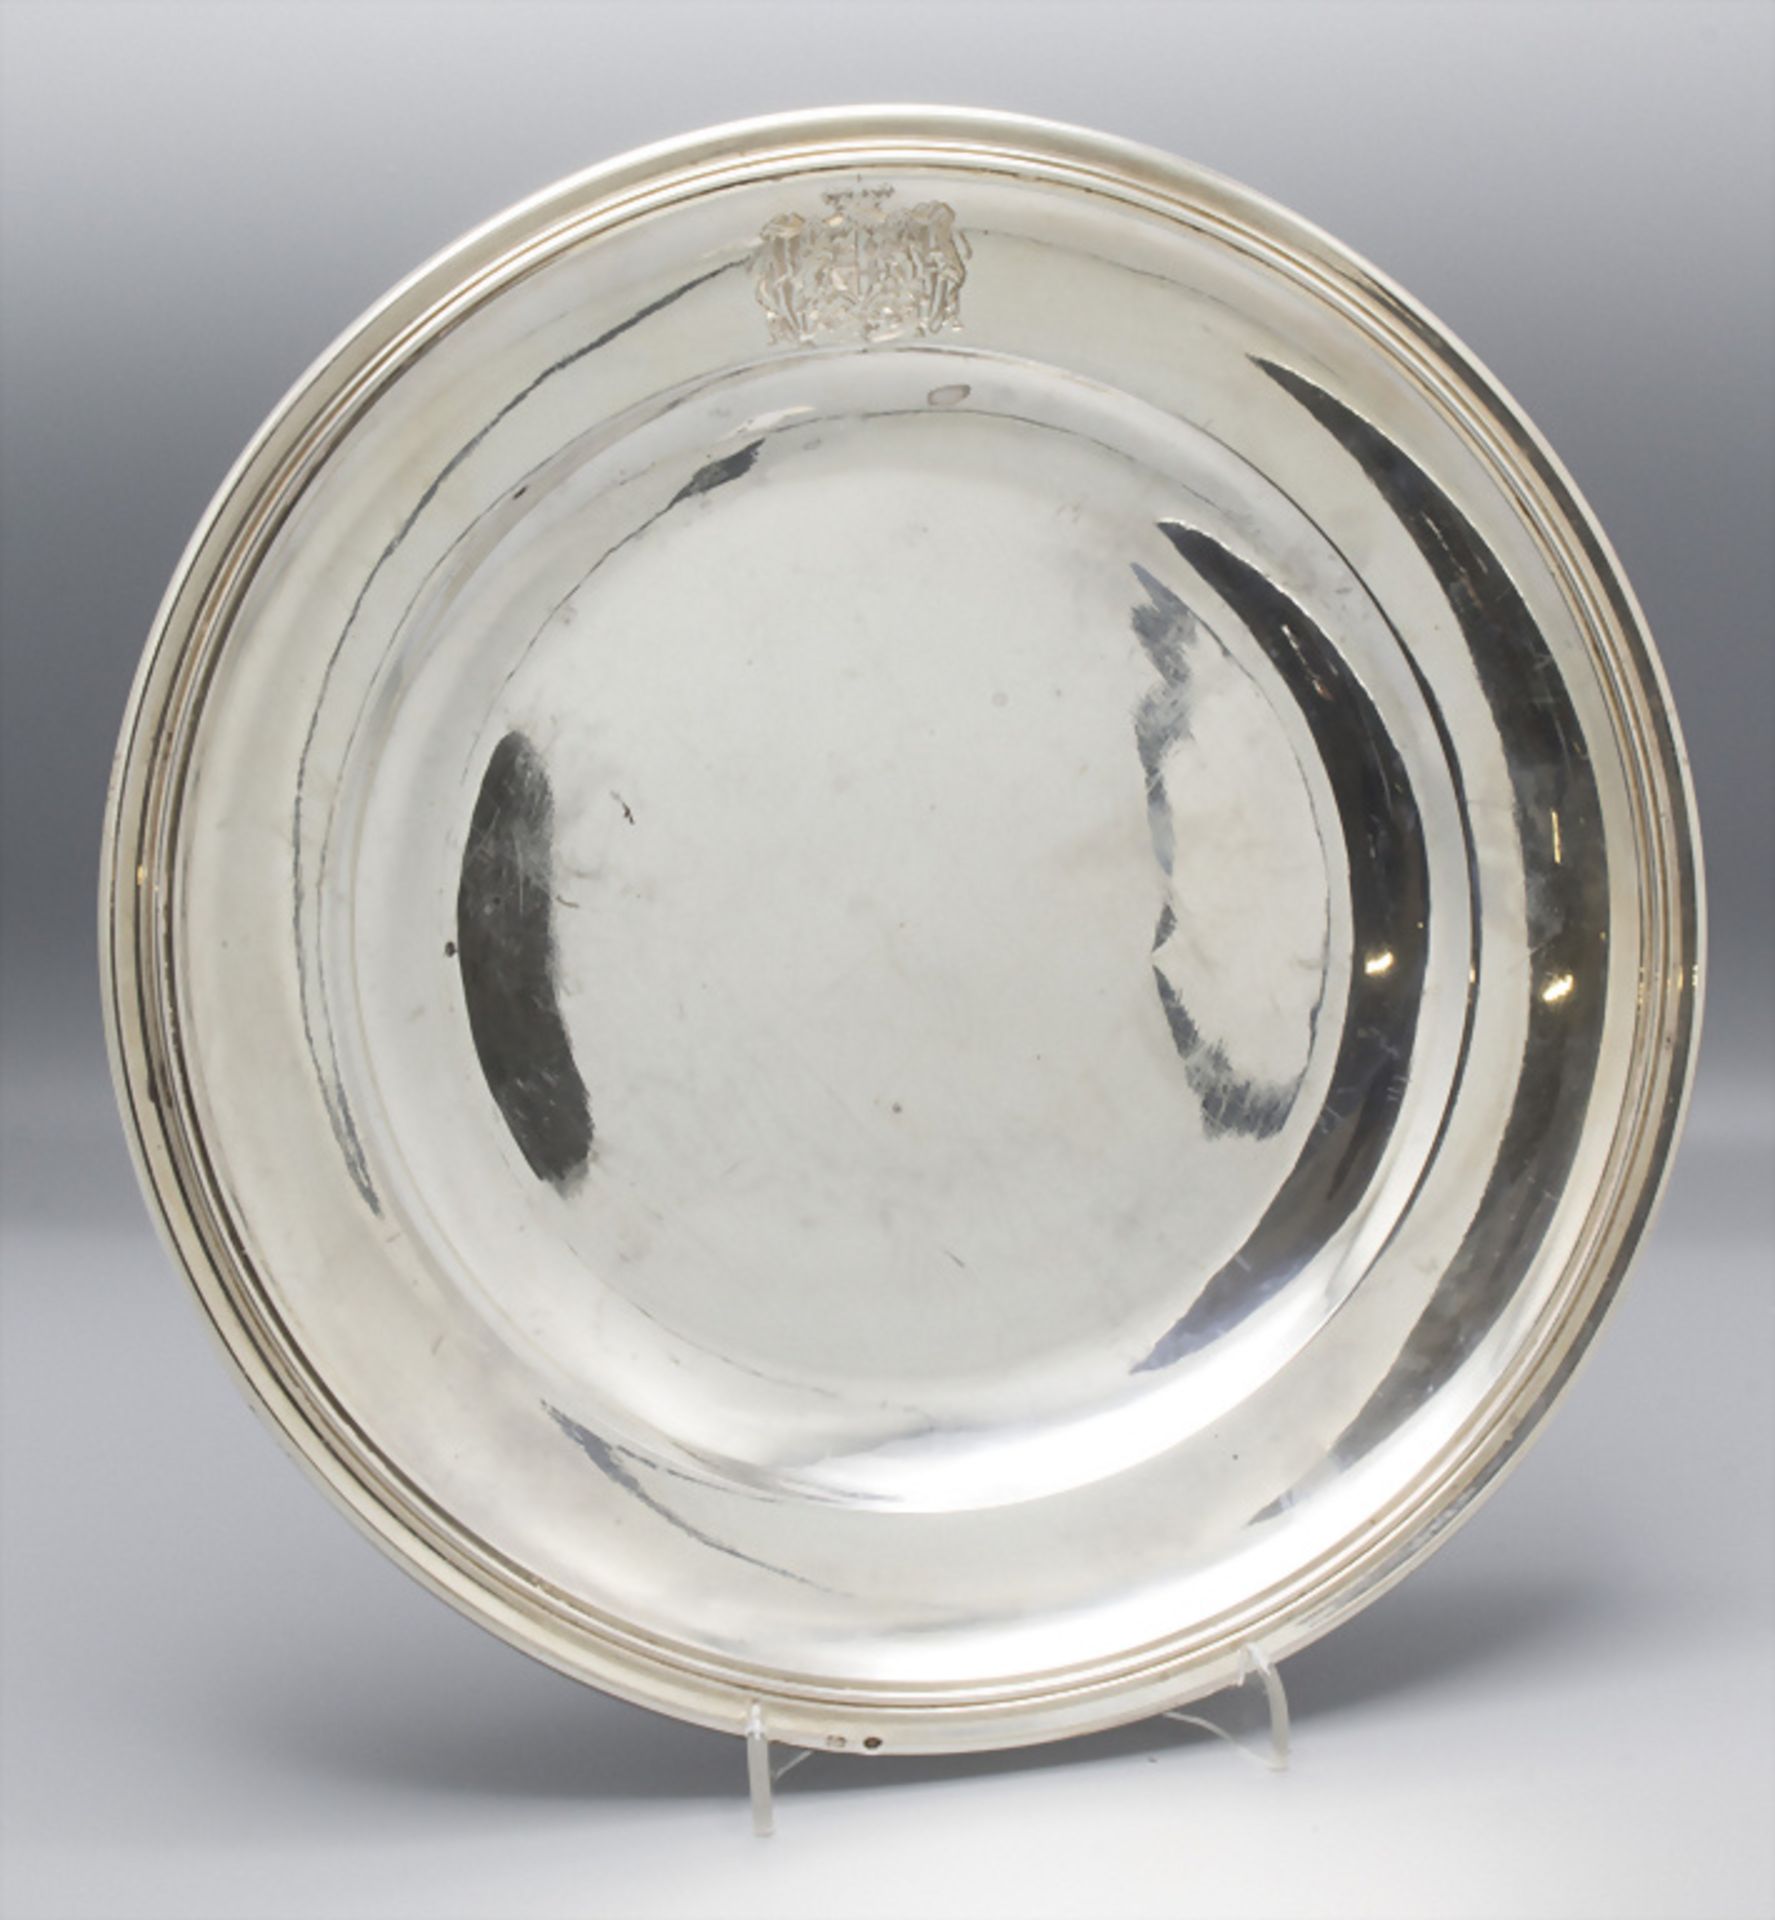 12 Silberteller / 12 assiettes en argent massif / A set of 12 silver plates, Odiot, Paris, um 1870 - Image 12 of 29